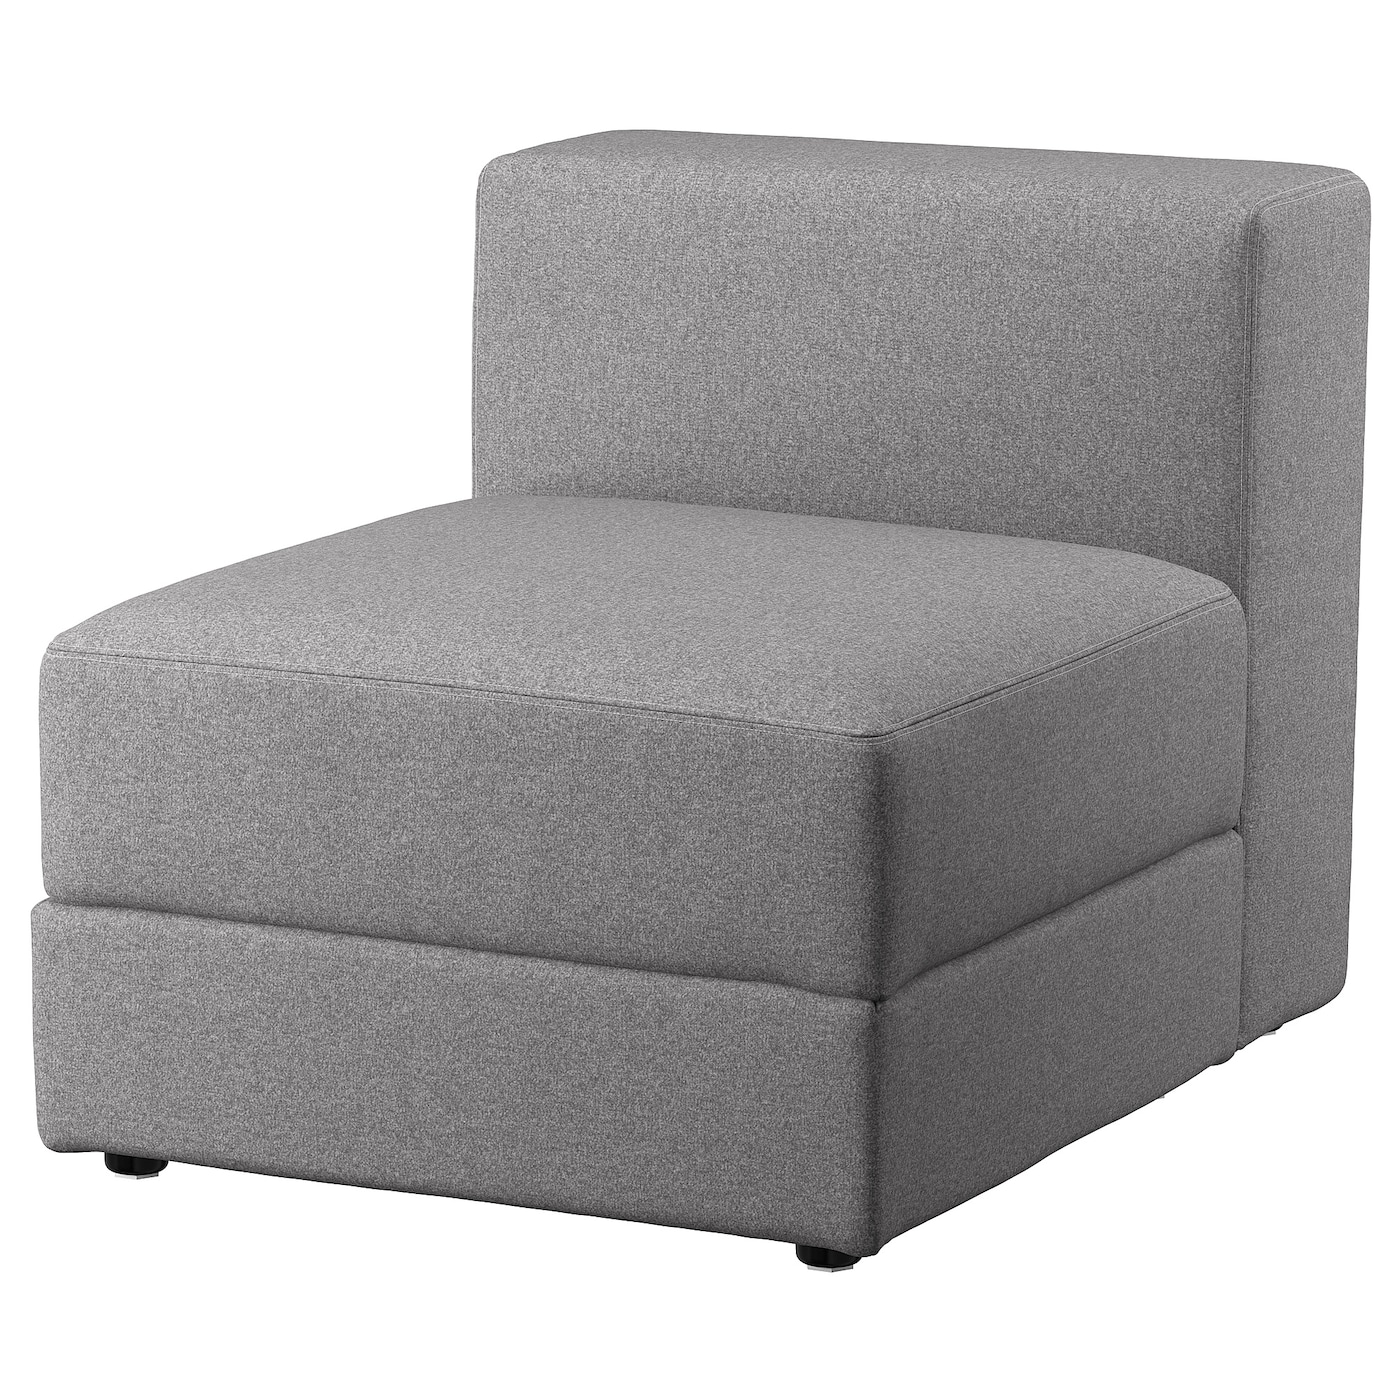 Кресло - IKEA JÄTTEBO/JATTEBO,  70х95х71 см, серый, ЙЕТТЕБО/ЯТТЕБО ИКЕА